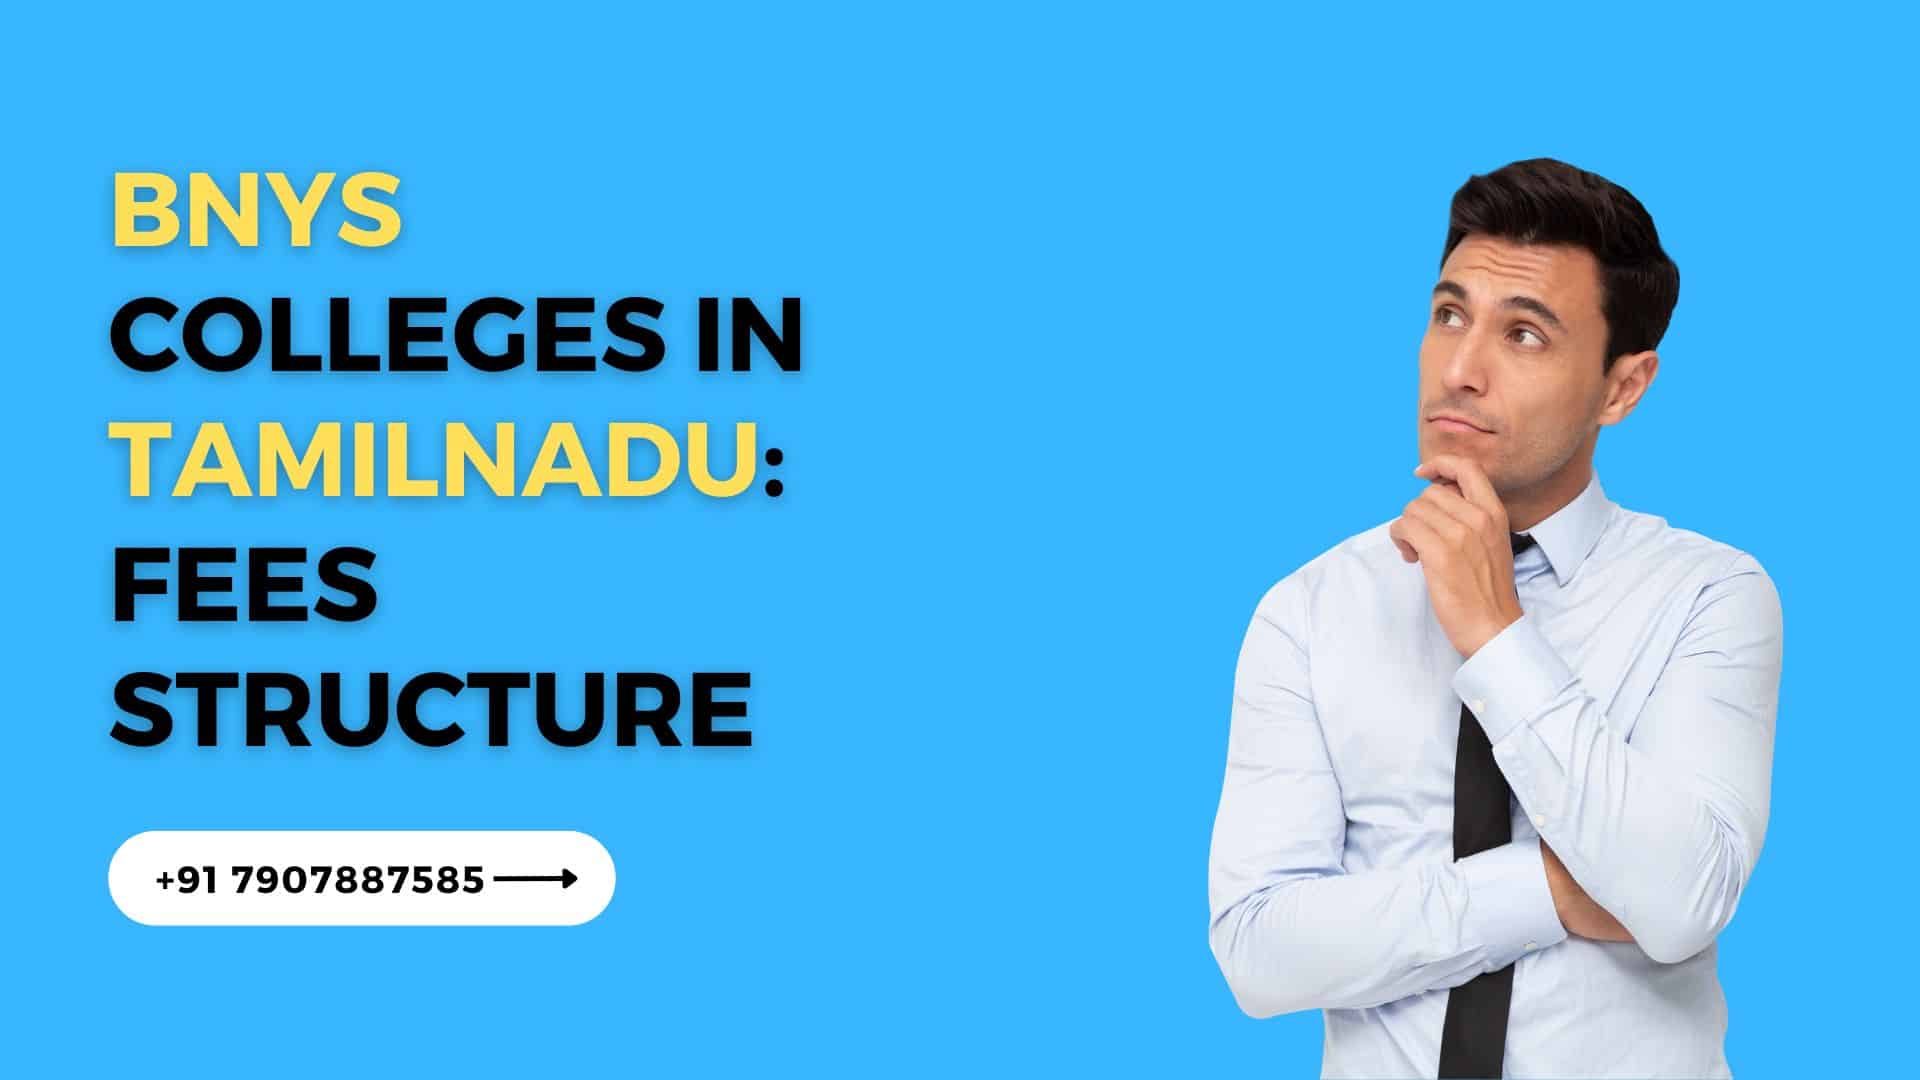 Bnys-colleges-in-tamilnadu-fees-structure